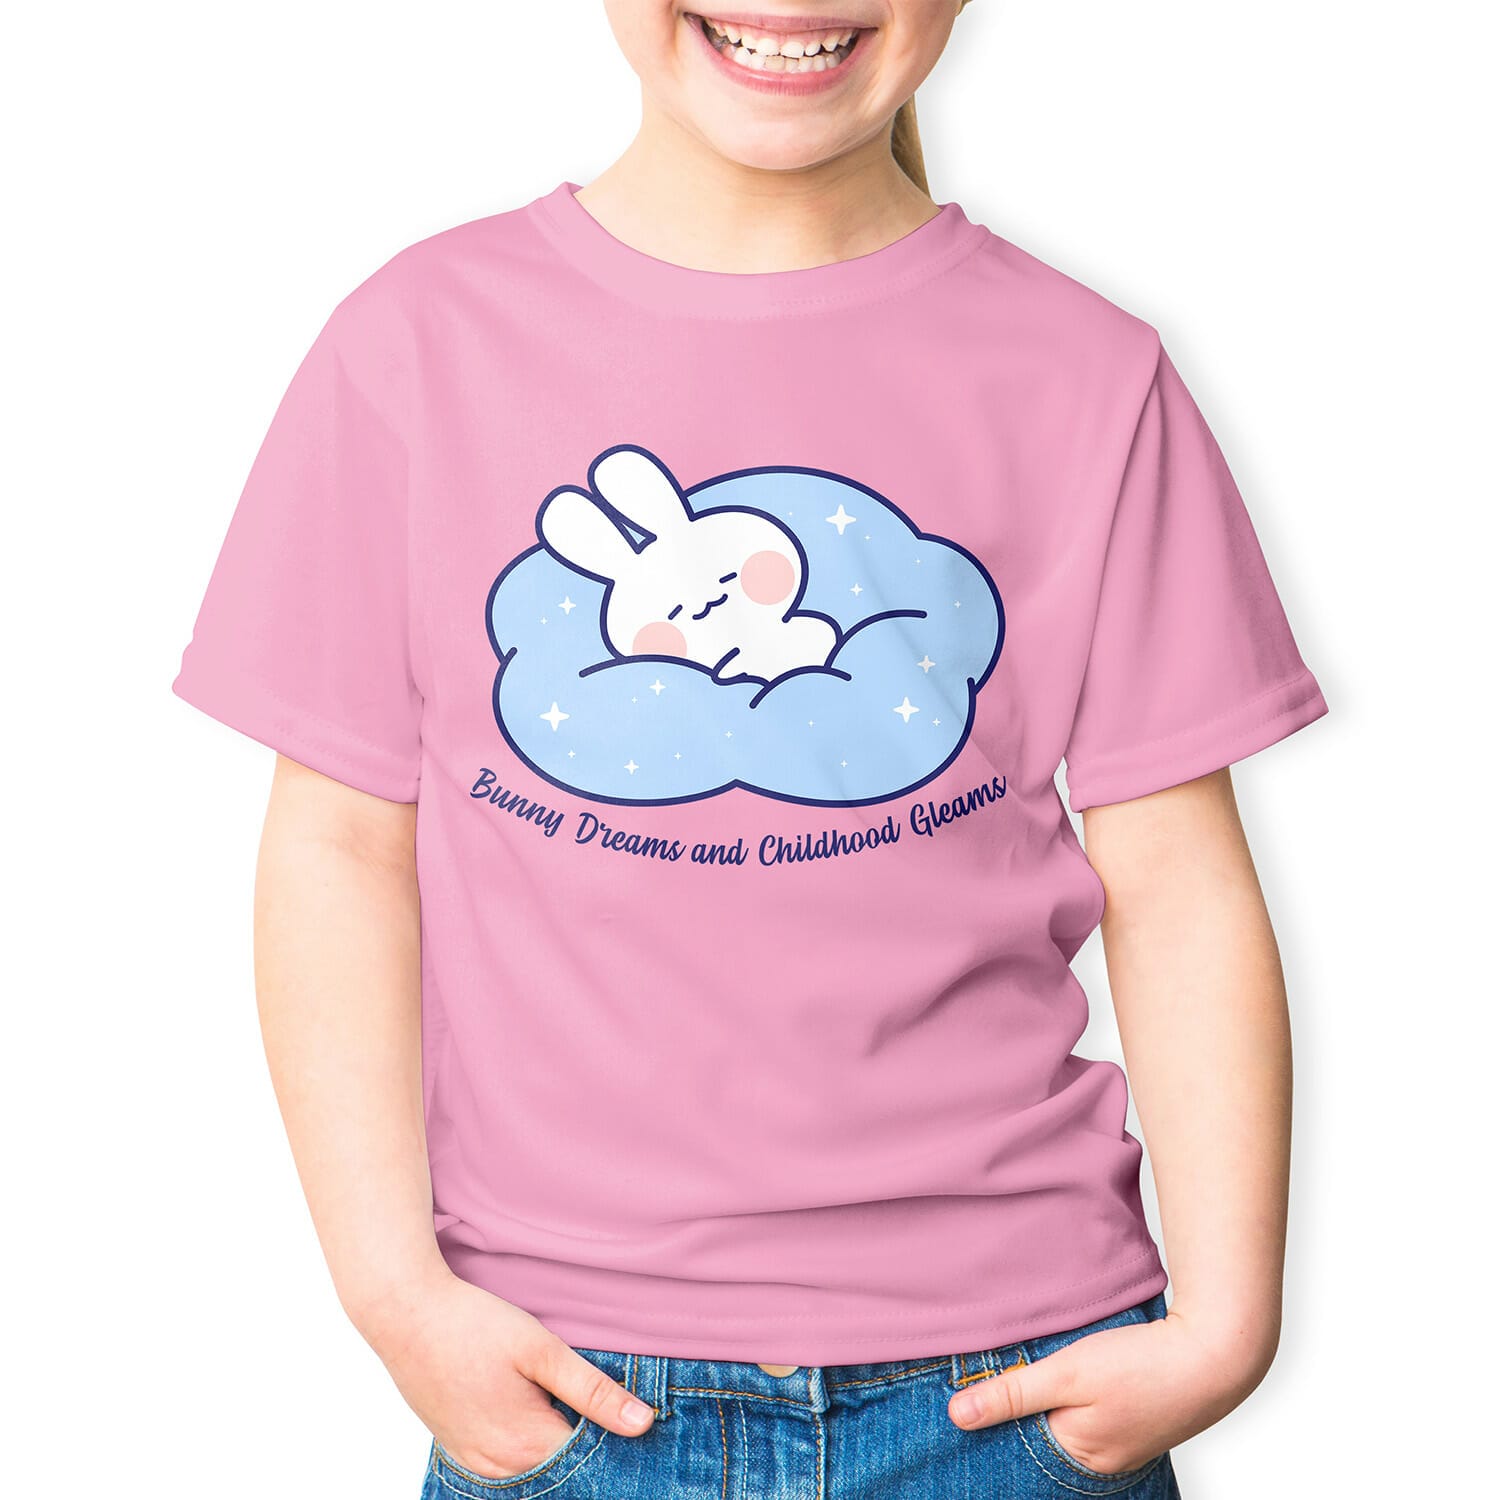 Bunny Dreams and Childhood Gleams kids Tshirt design